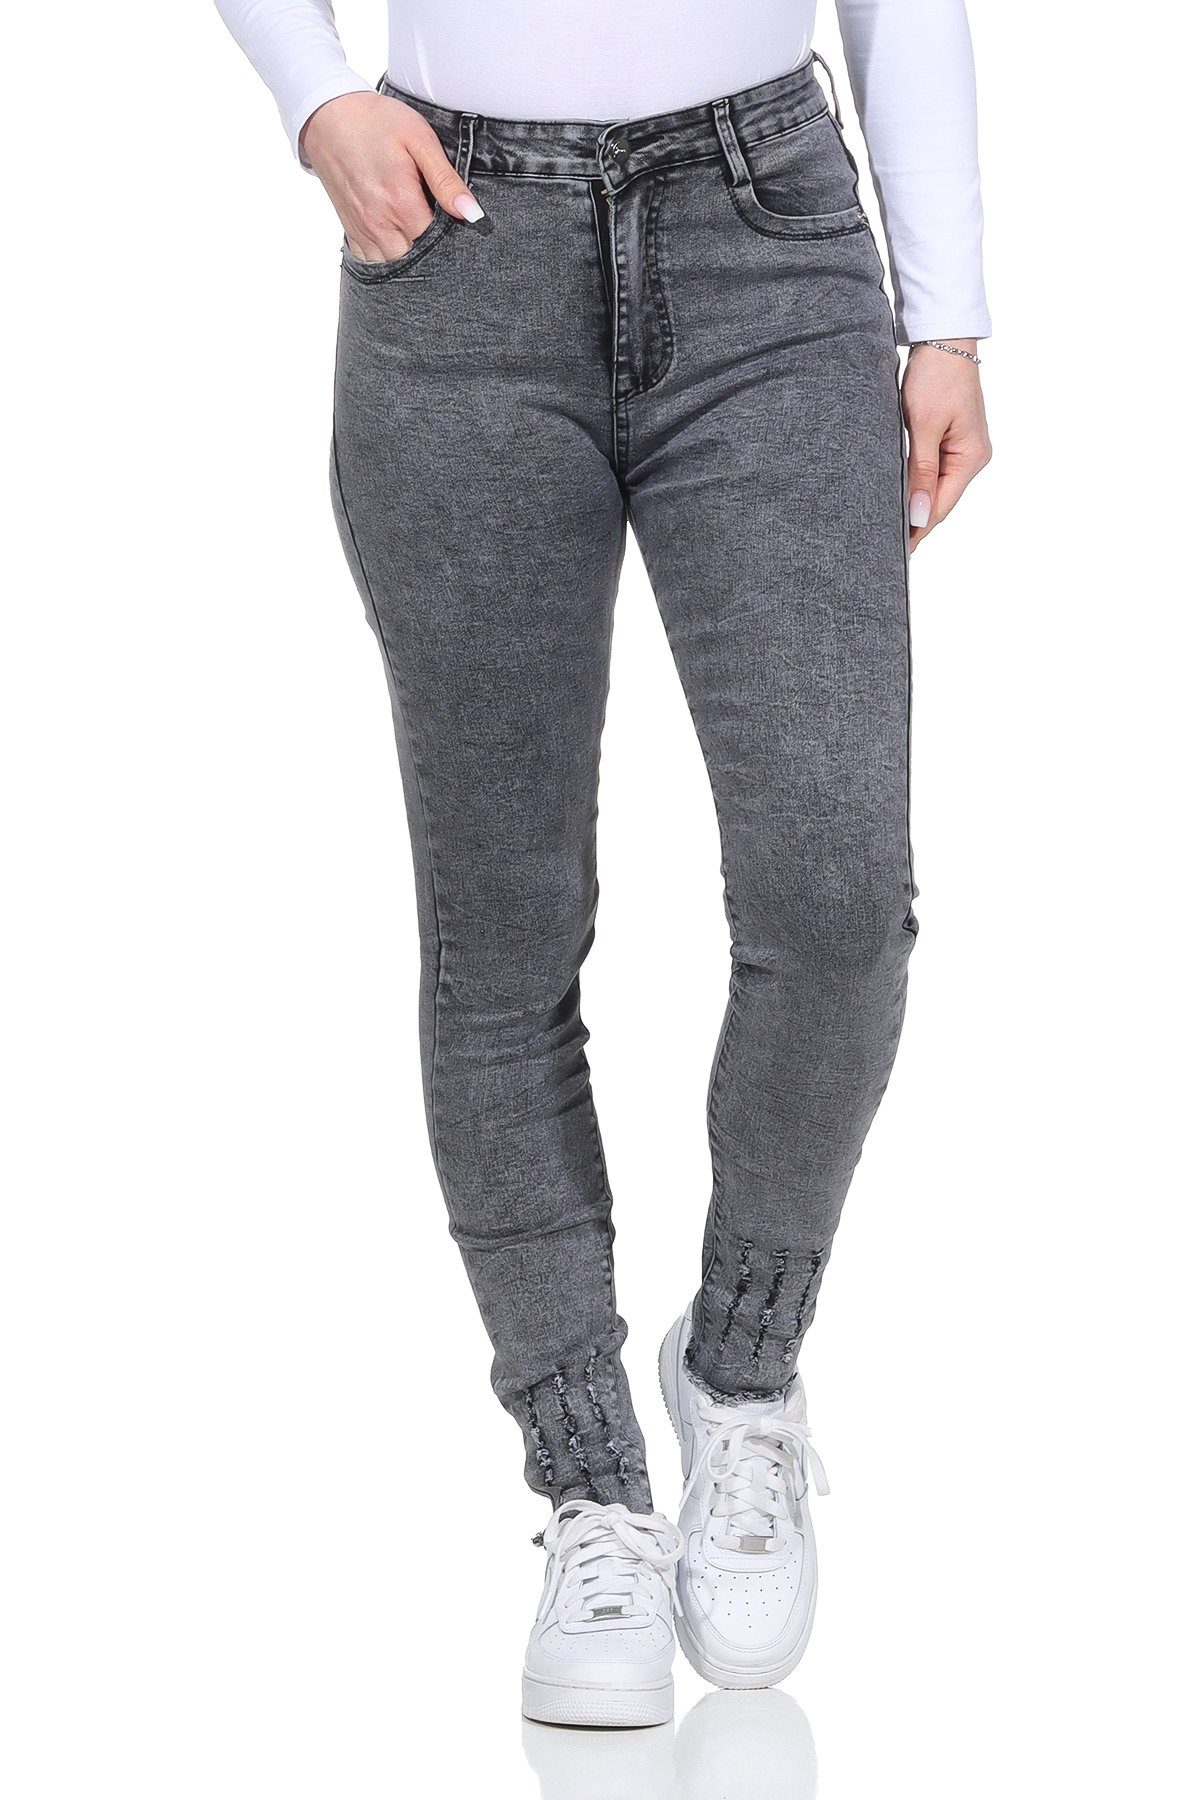 Aurela Damenmode 5-Pocket-Jeans Jeanshosen für Damen Stretch Jeans Destroyed Look moderner Distressed Look Grau